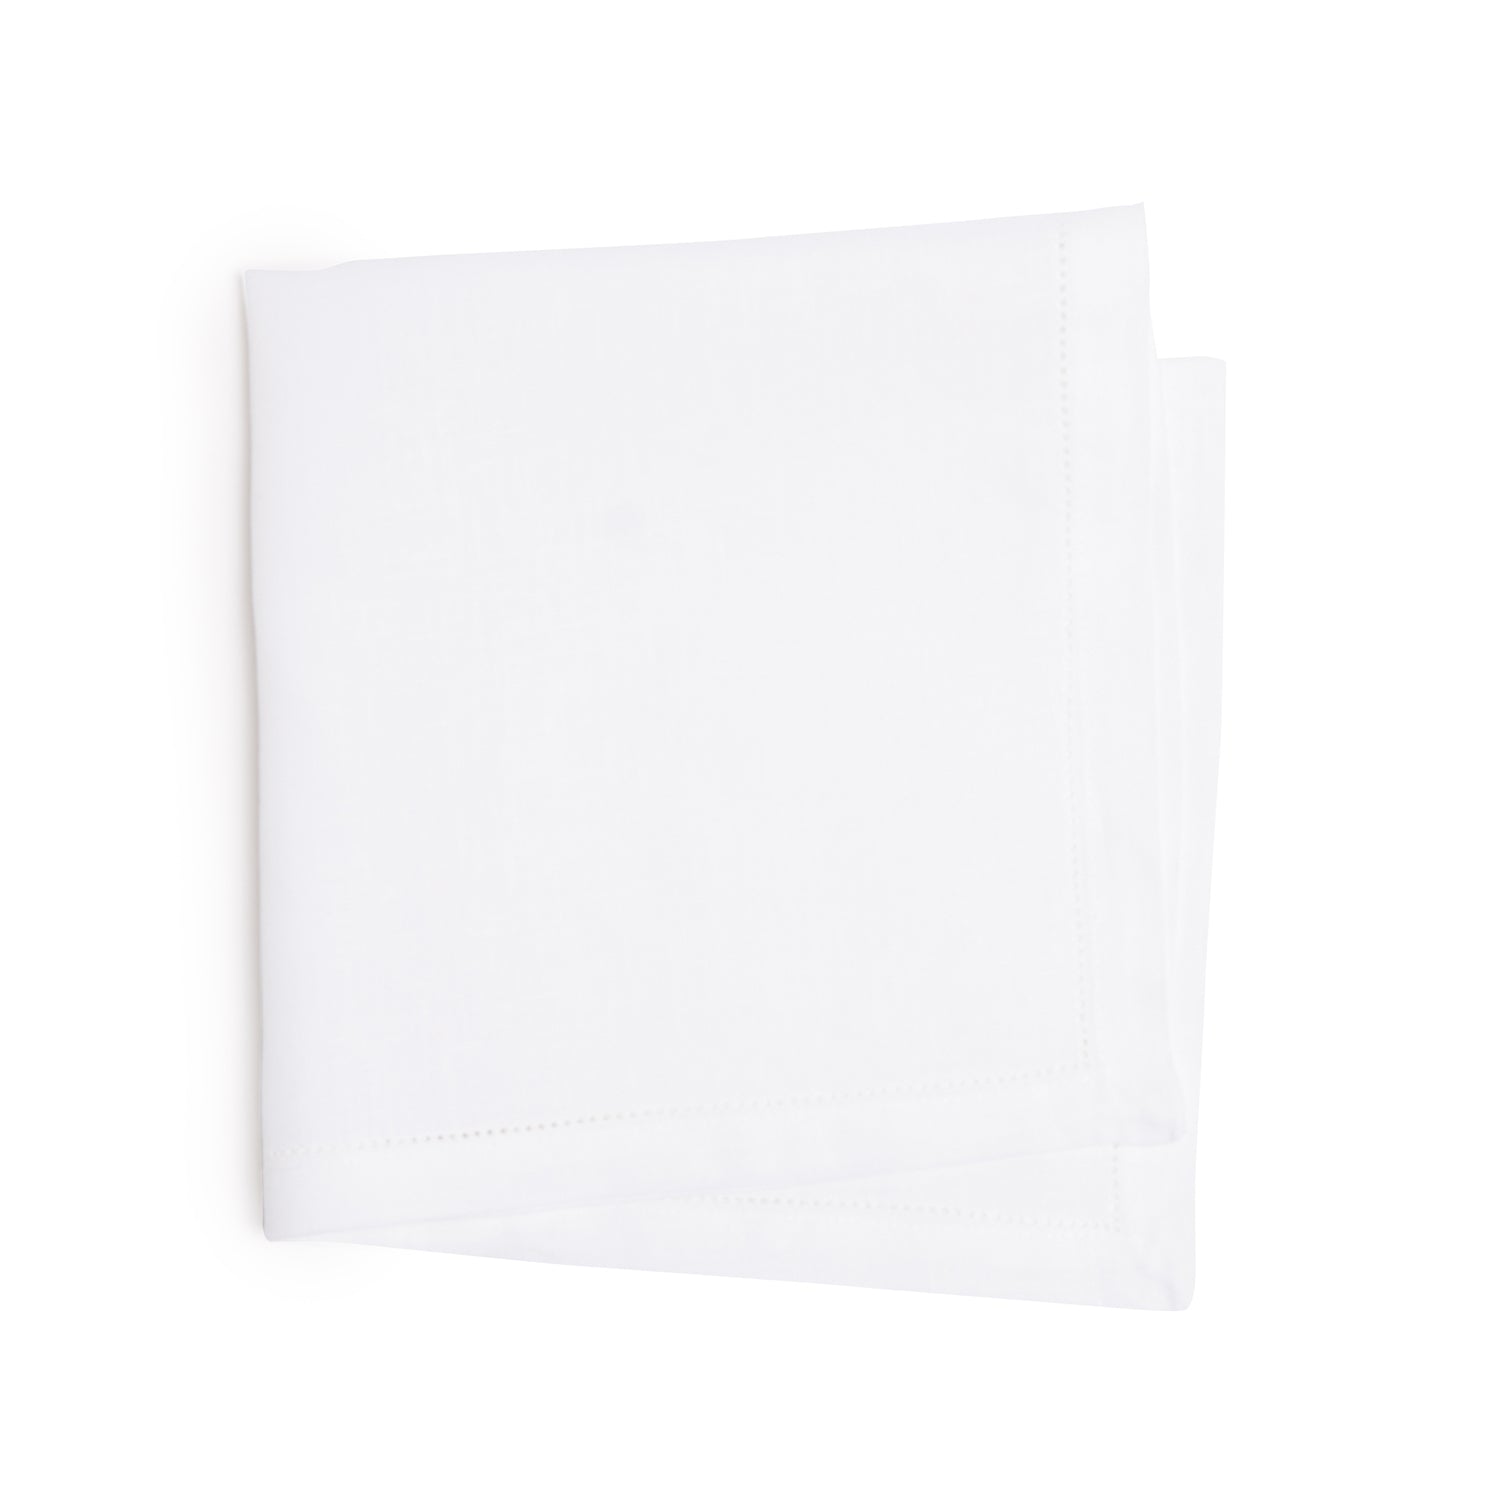 Paramount White 100% Linen Napkin With Hemstitch